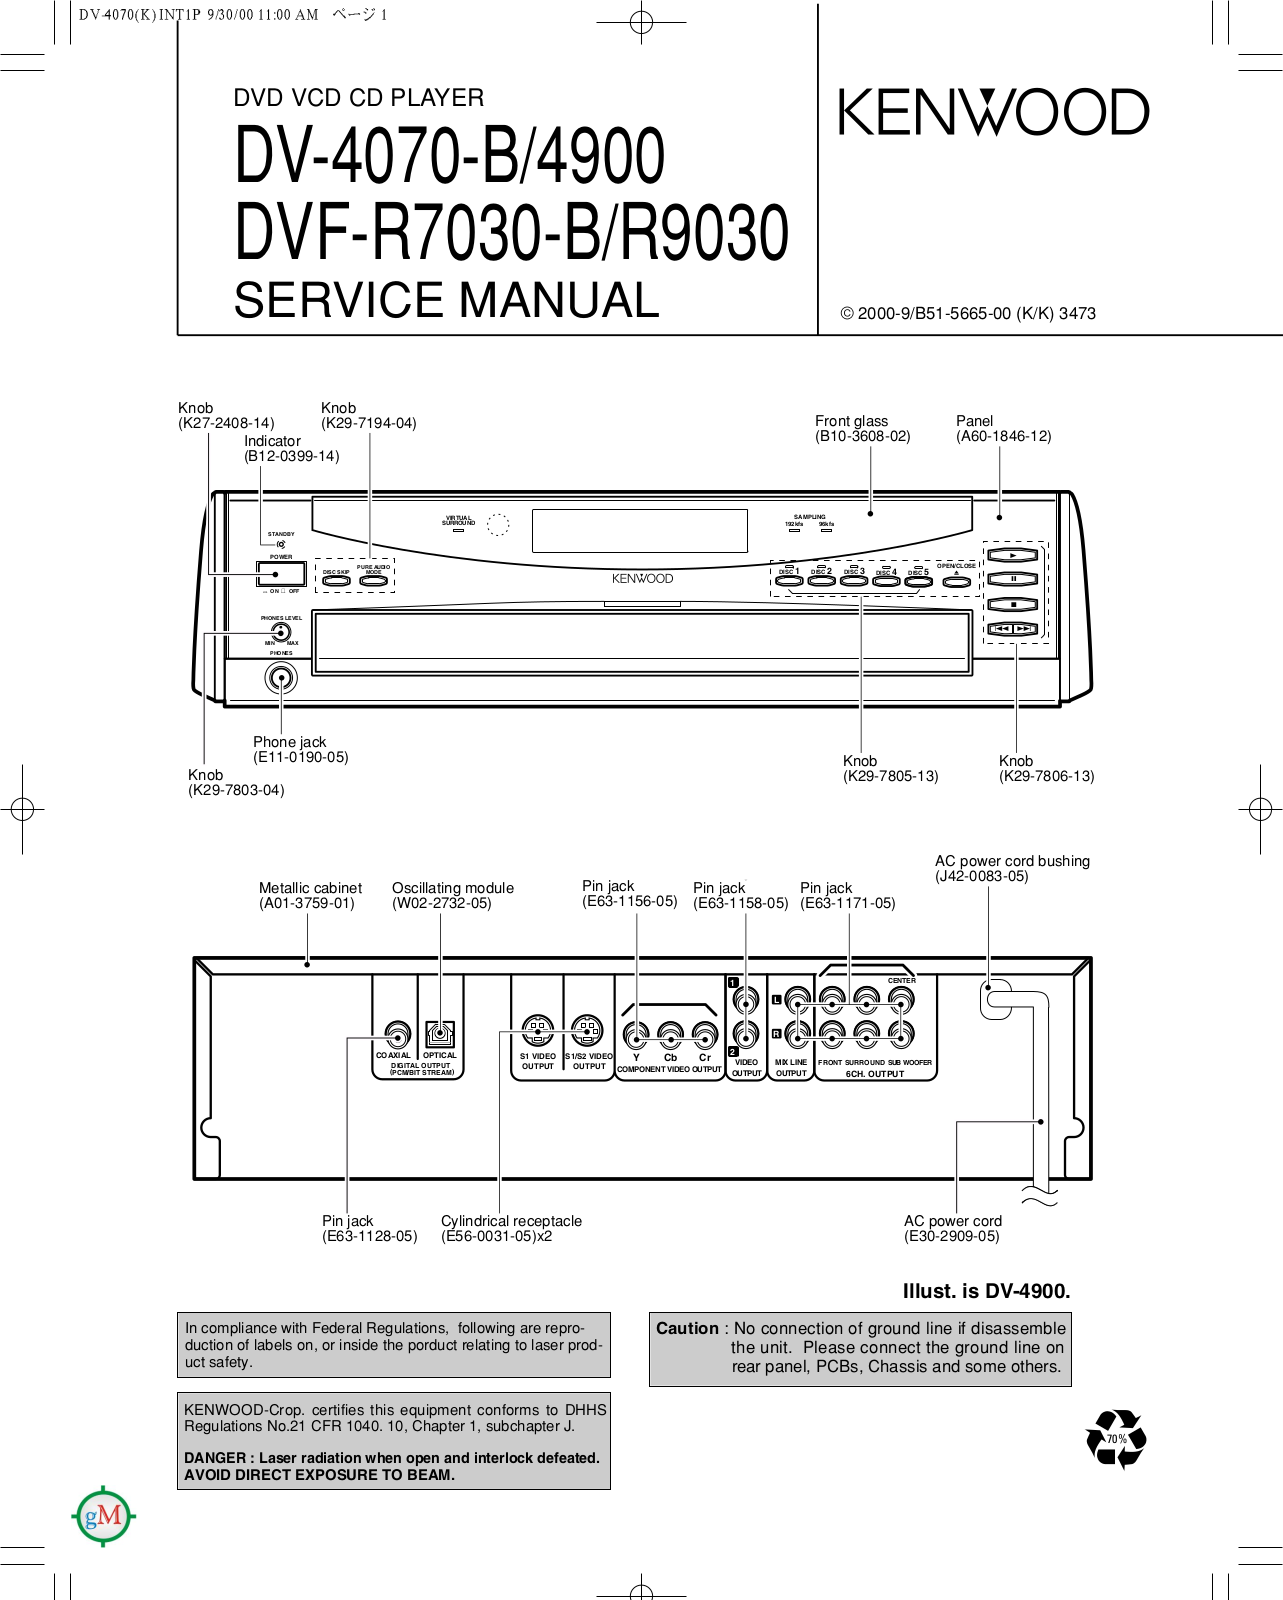 Kenwood DVFR-9030, DVFR-7030, DV-4900, DV-4070-B Service Manual